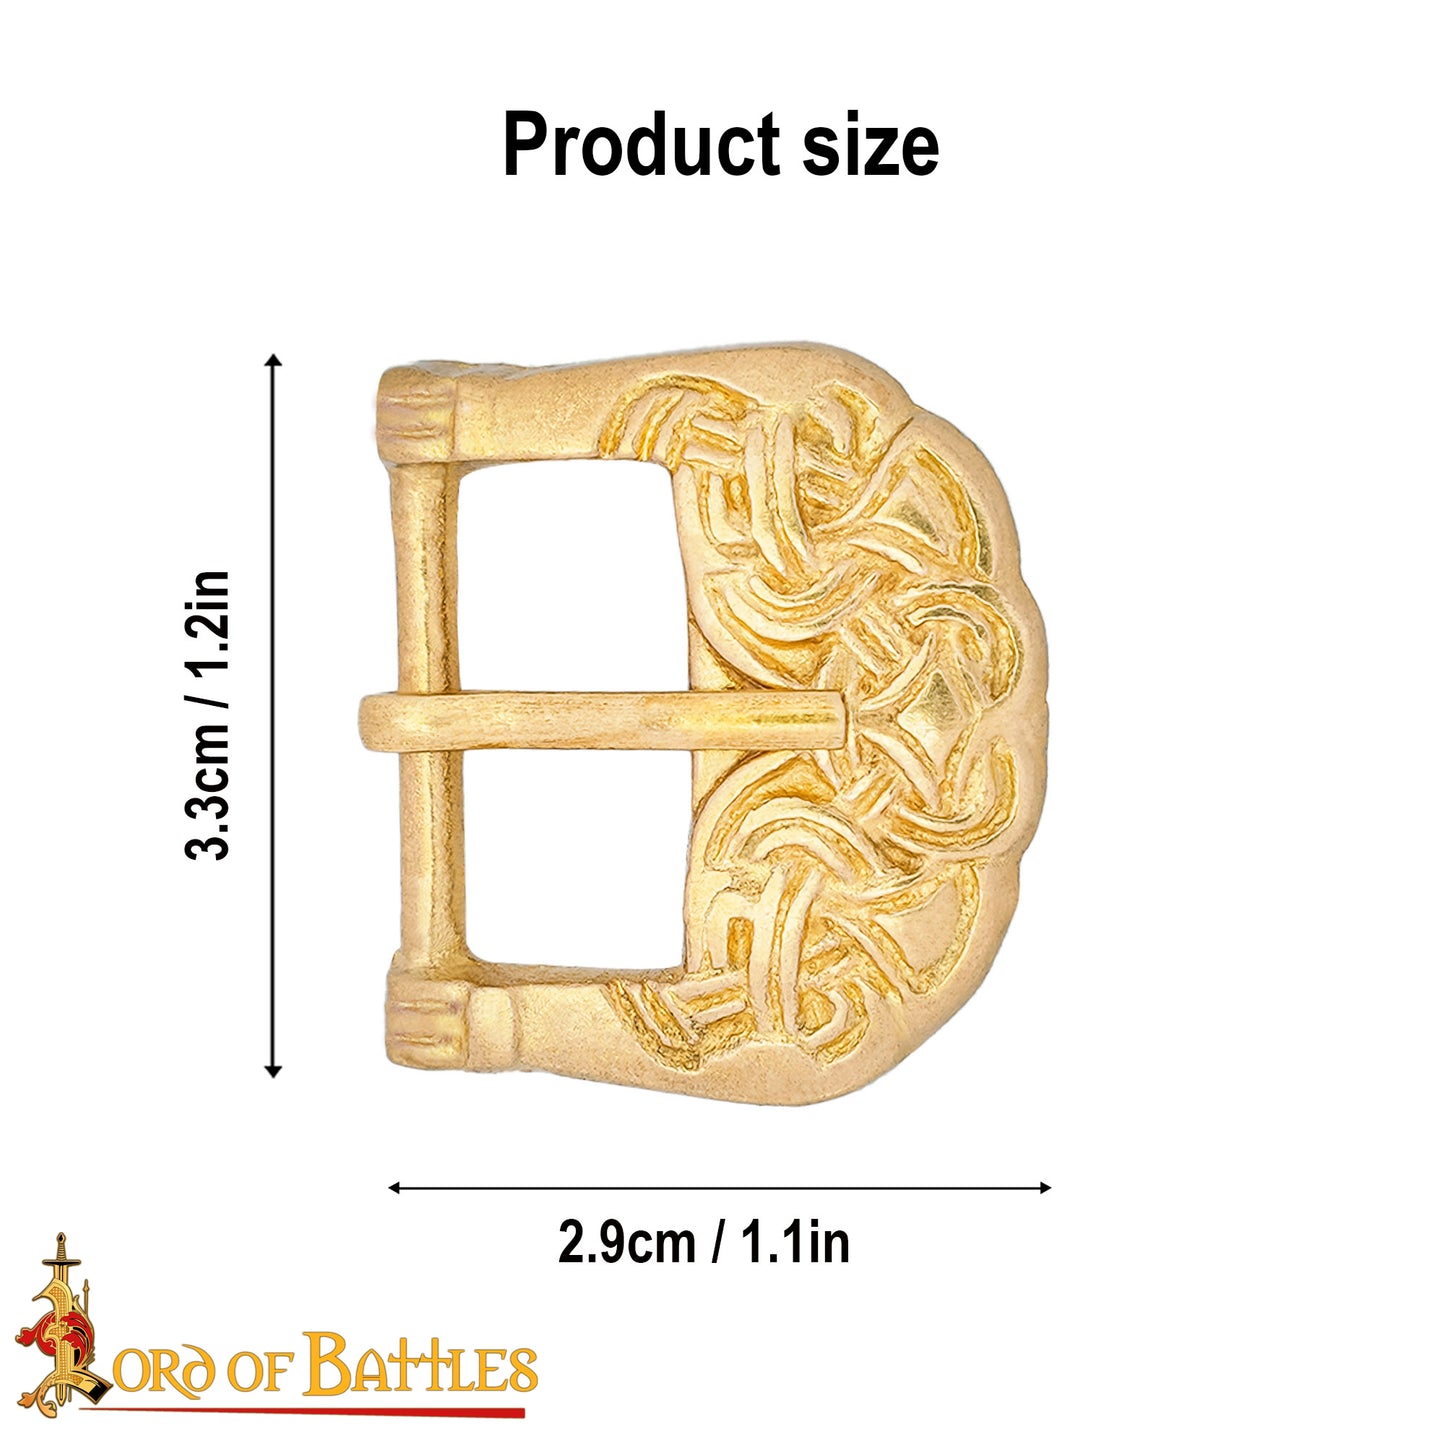 Viking Belt Buckle - Borre Style - Make your own Belt